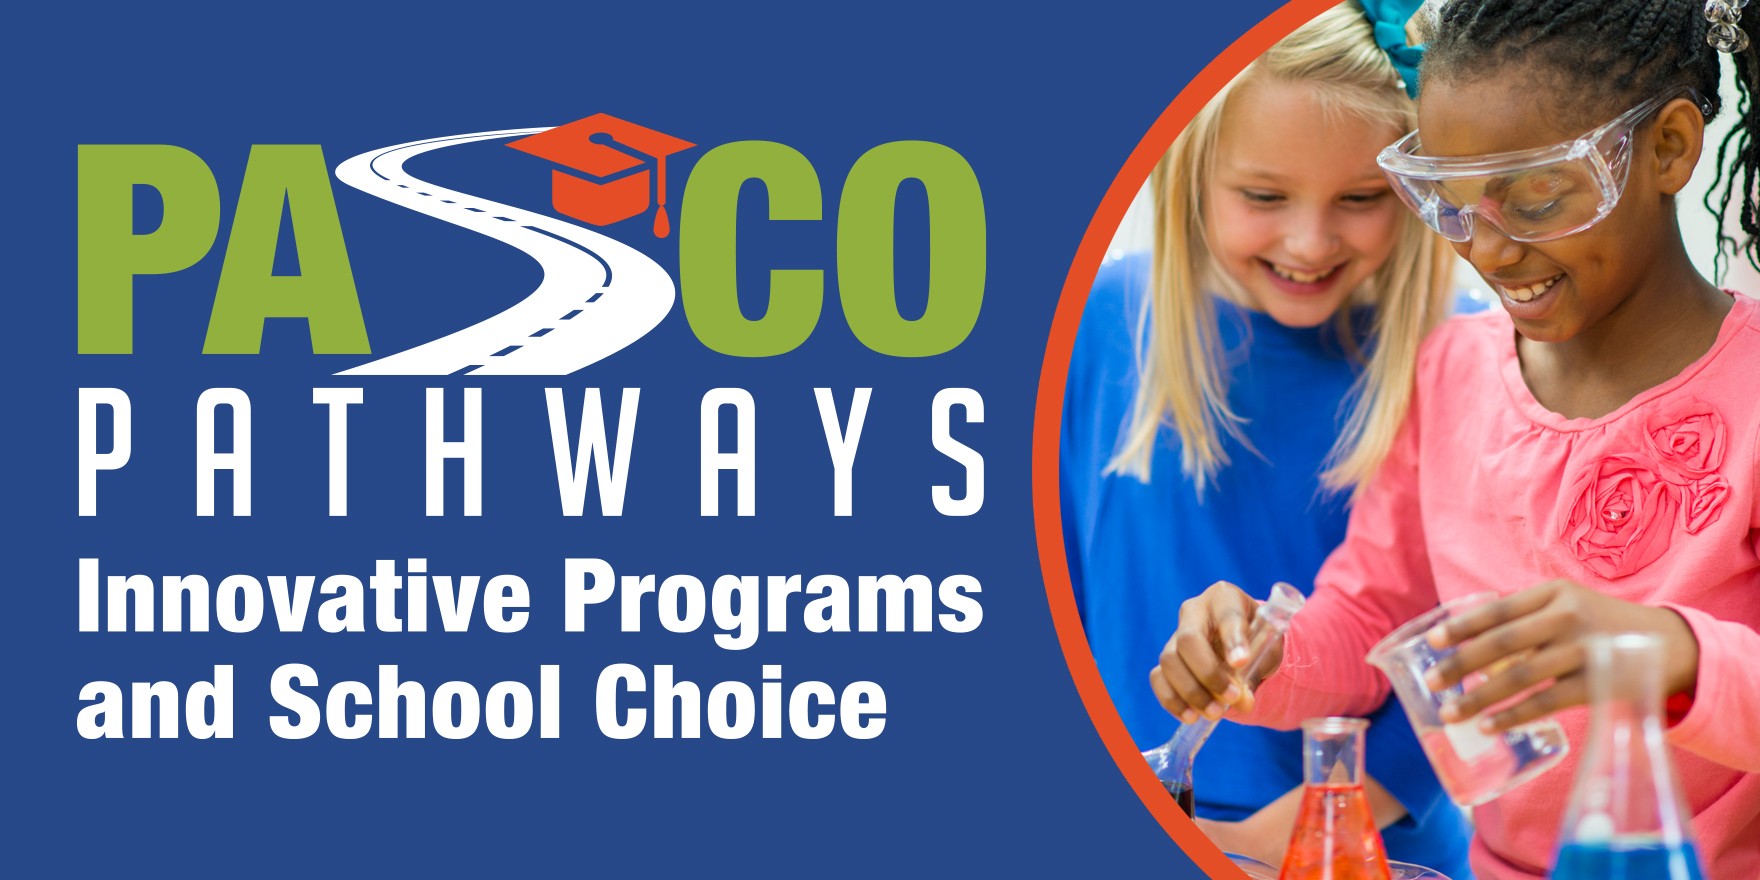 Pasco Pathways - Innovative Programs and School Choice